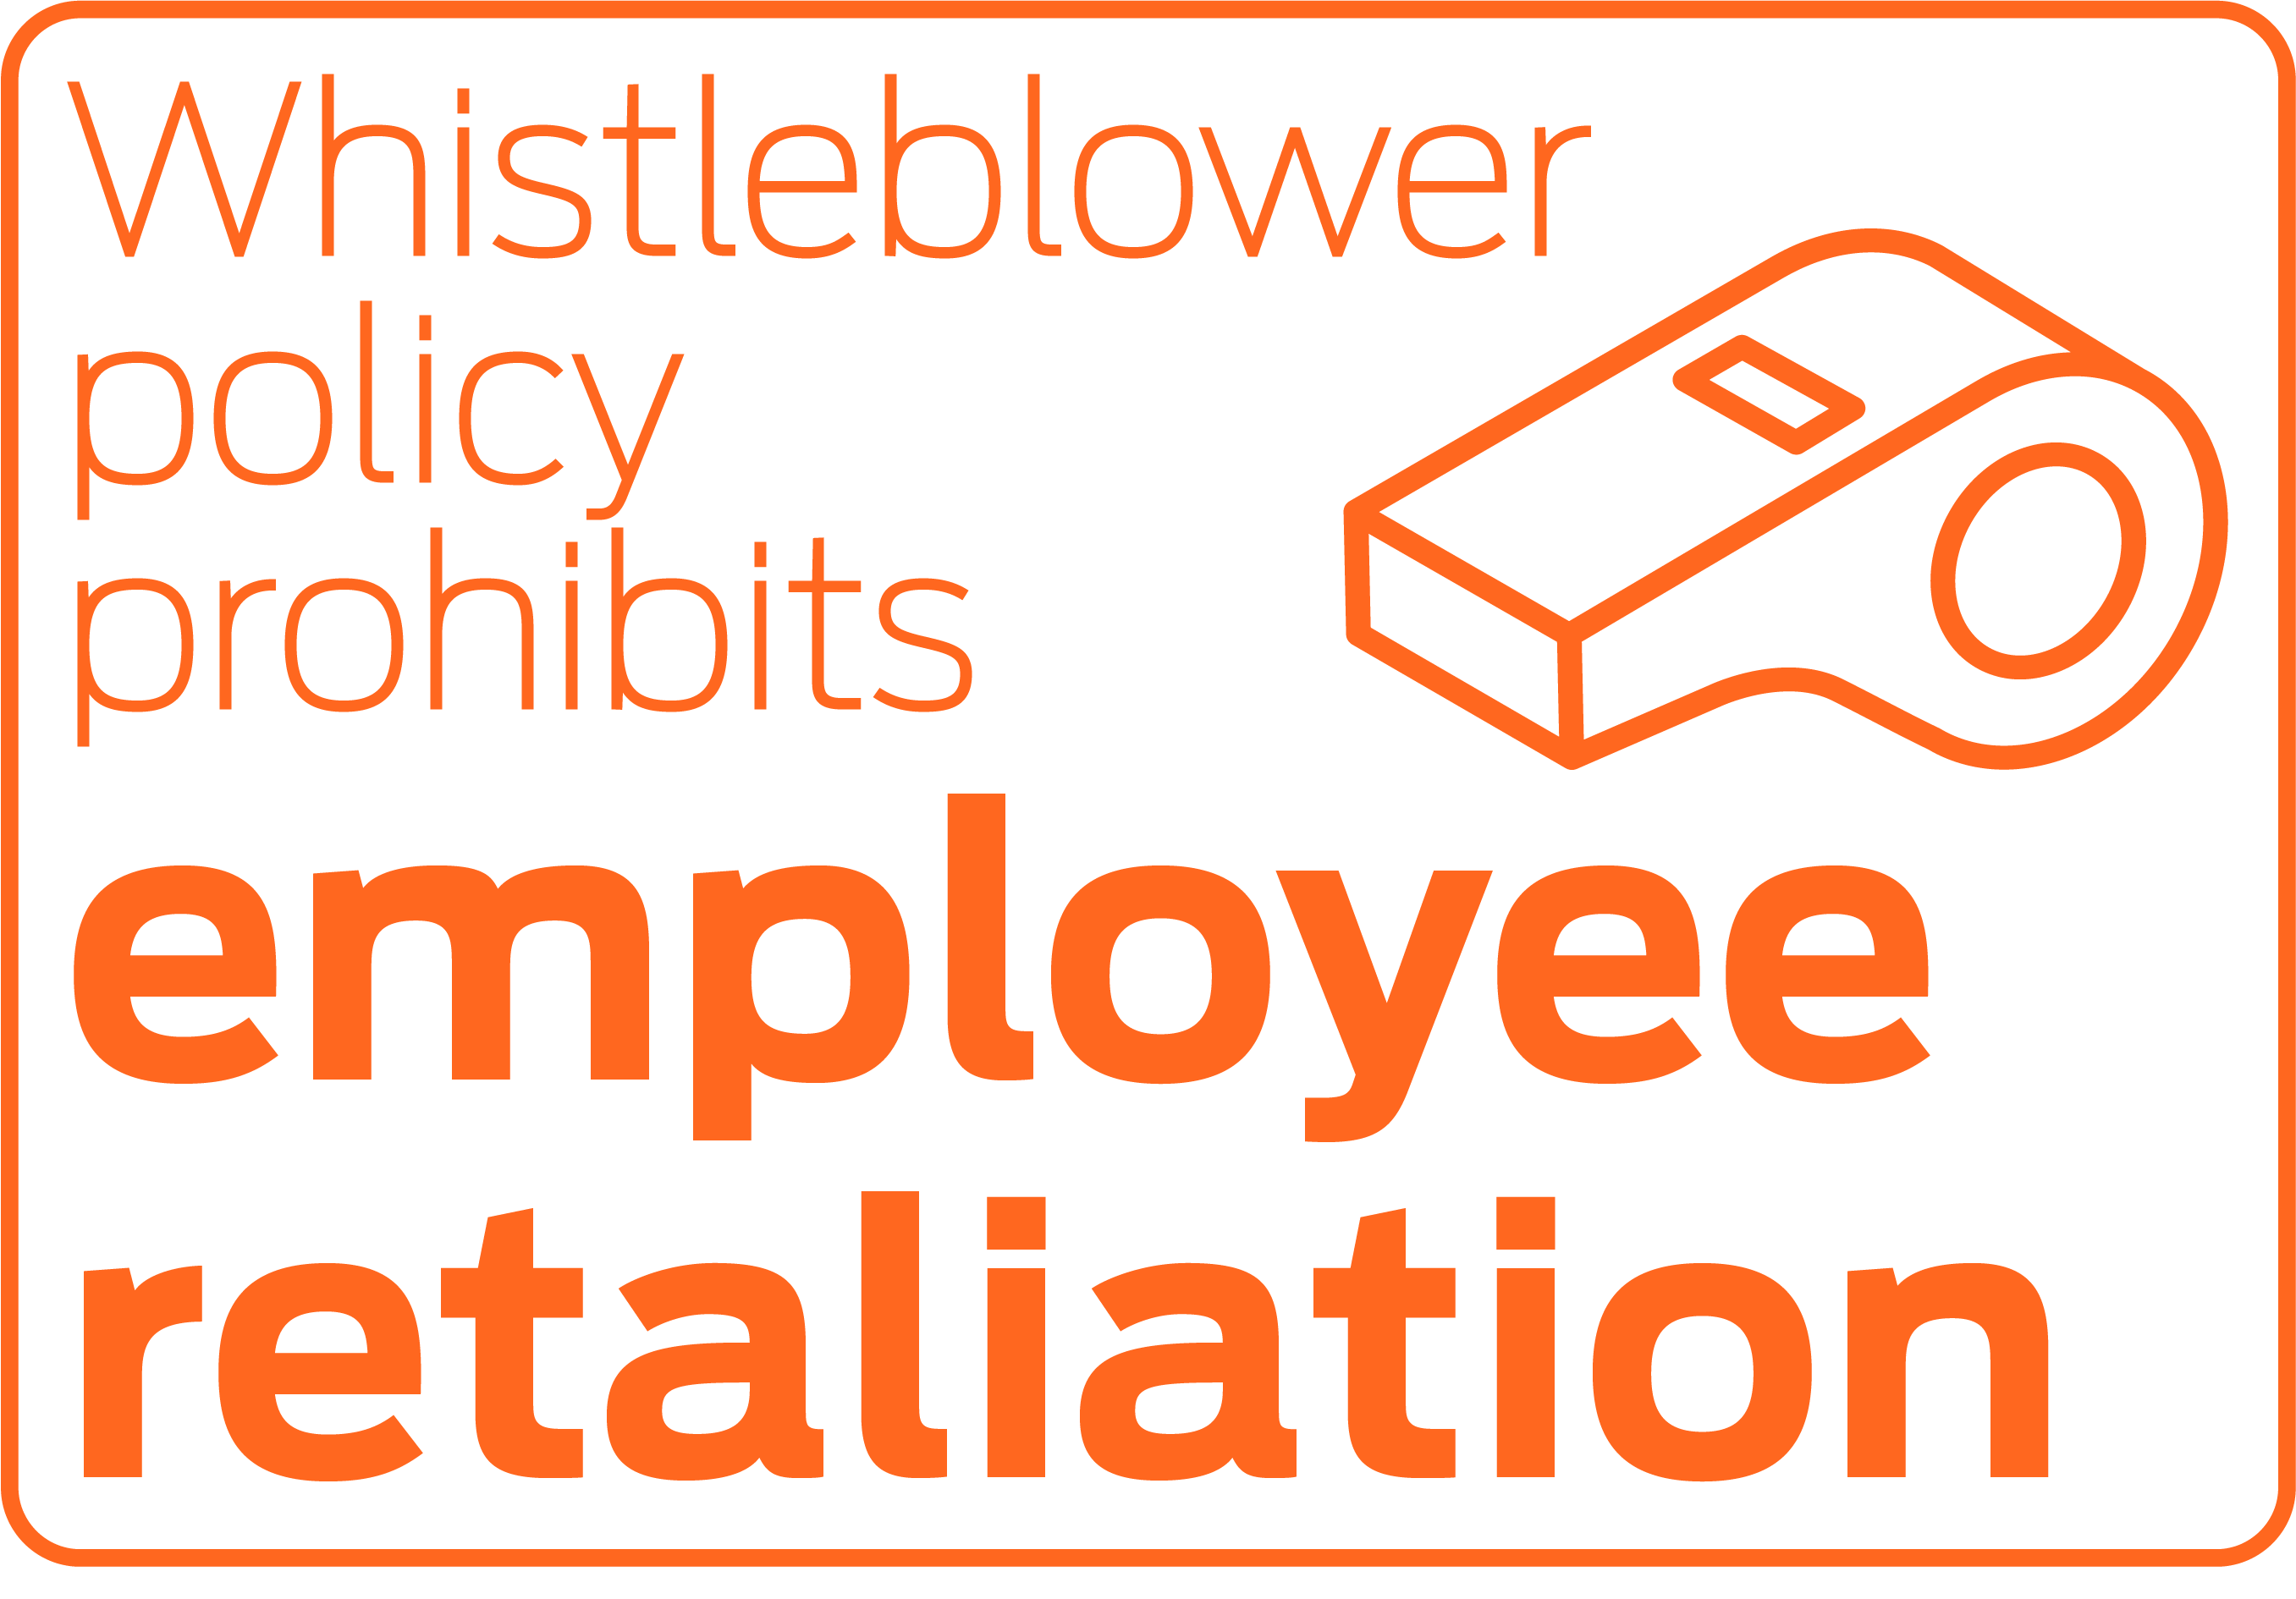 Whistleblower policy prohibits employee retaliation